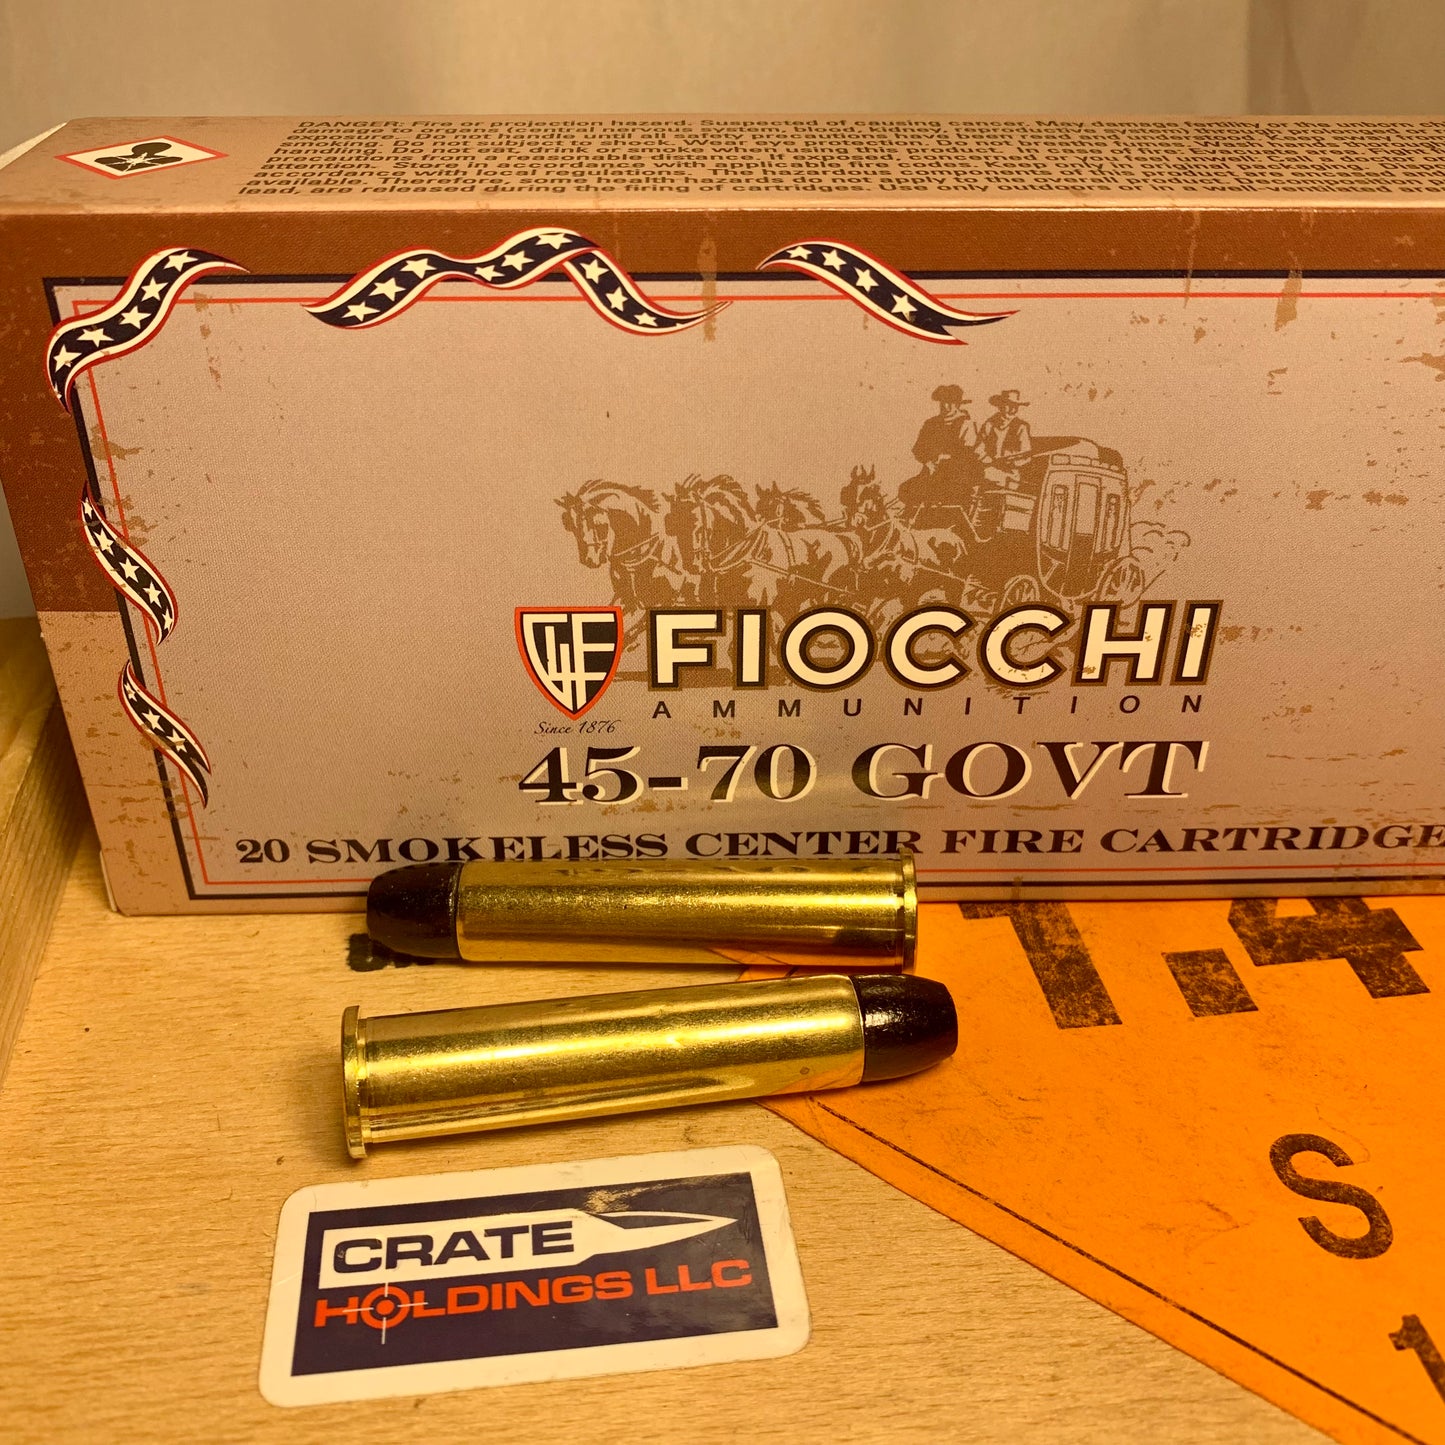 20 Count Box Fiocchi .45-70 GOVT Ammo 405gr LRN FP Cowboy Load - 4570A